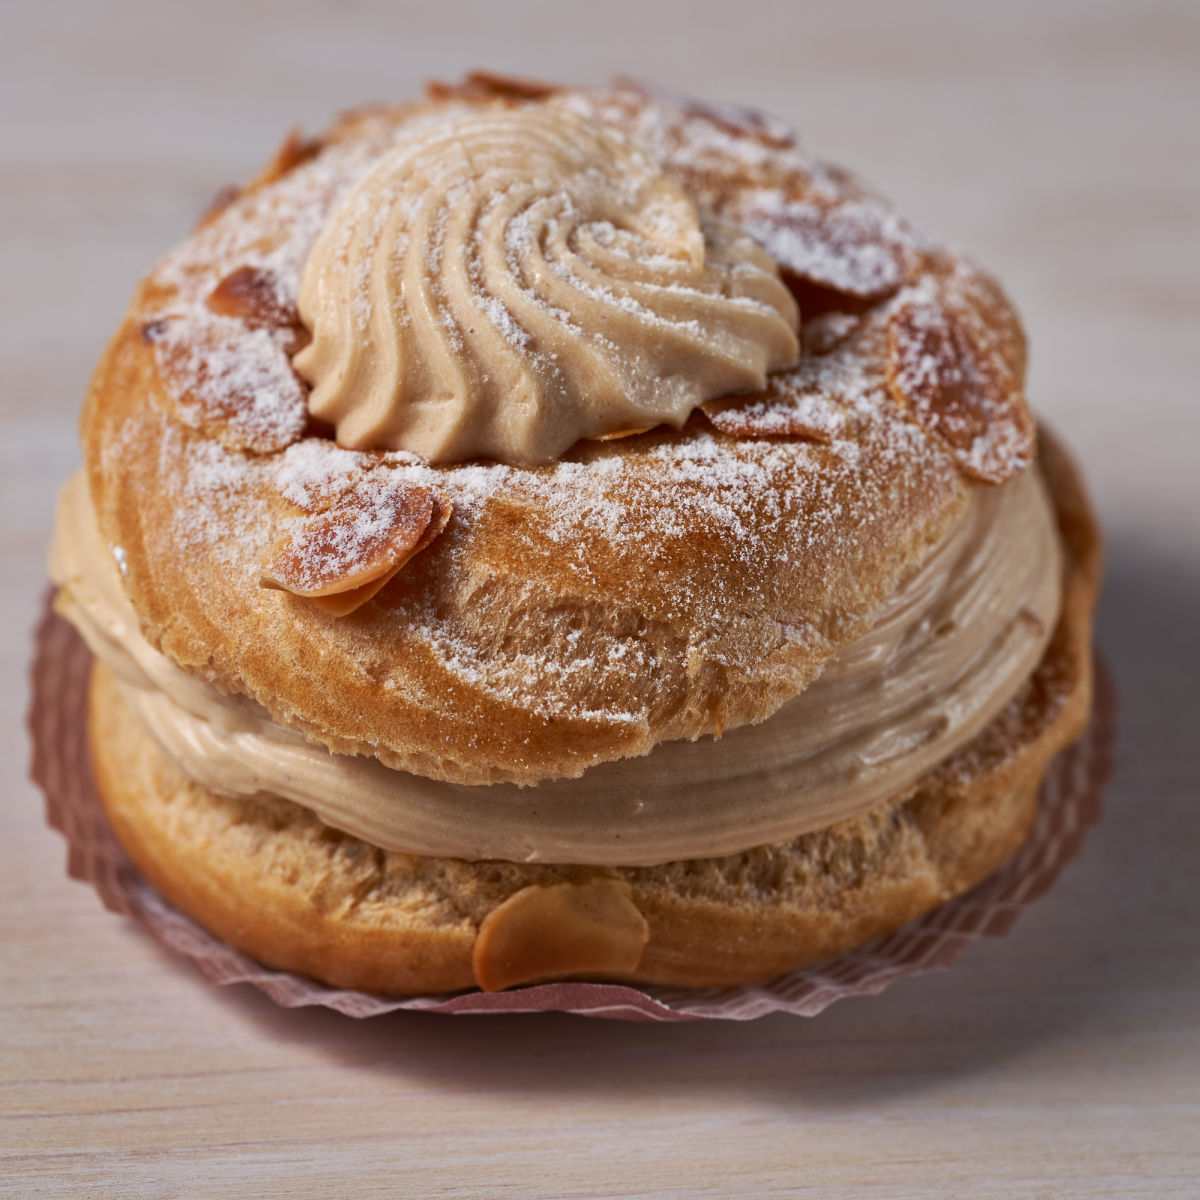 Mocha Cream Puffs – Coffee Flavored Choix Pastry Dessert